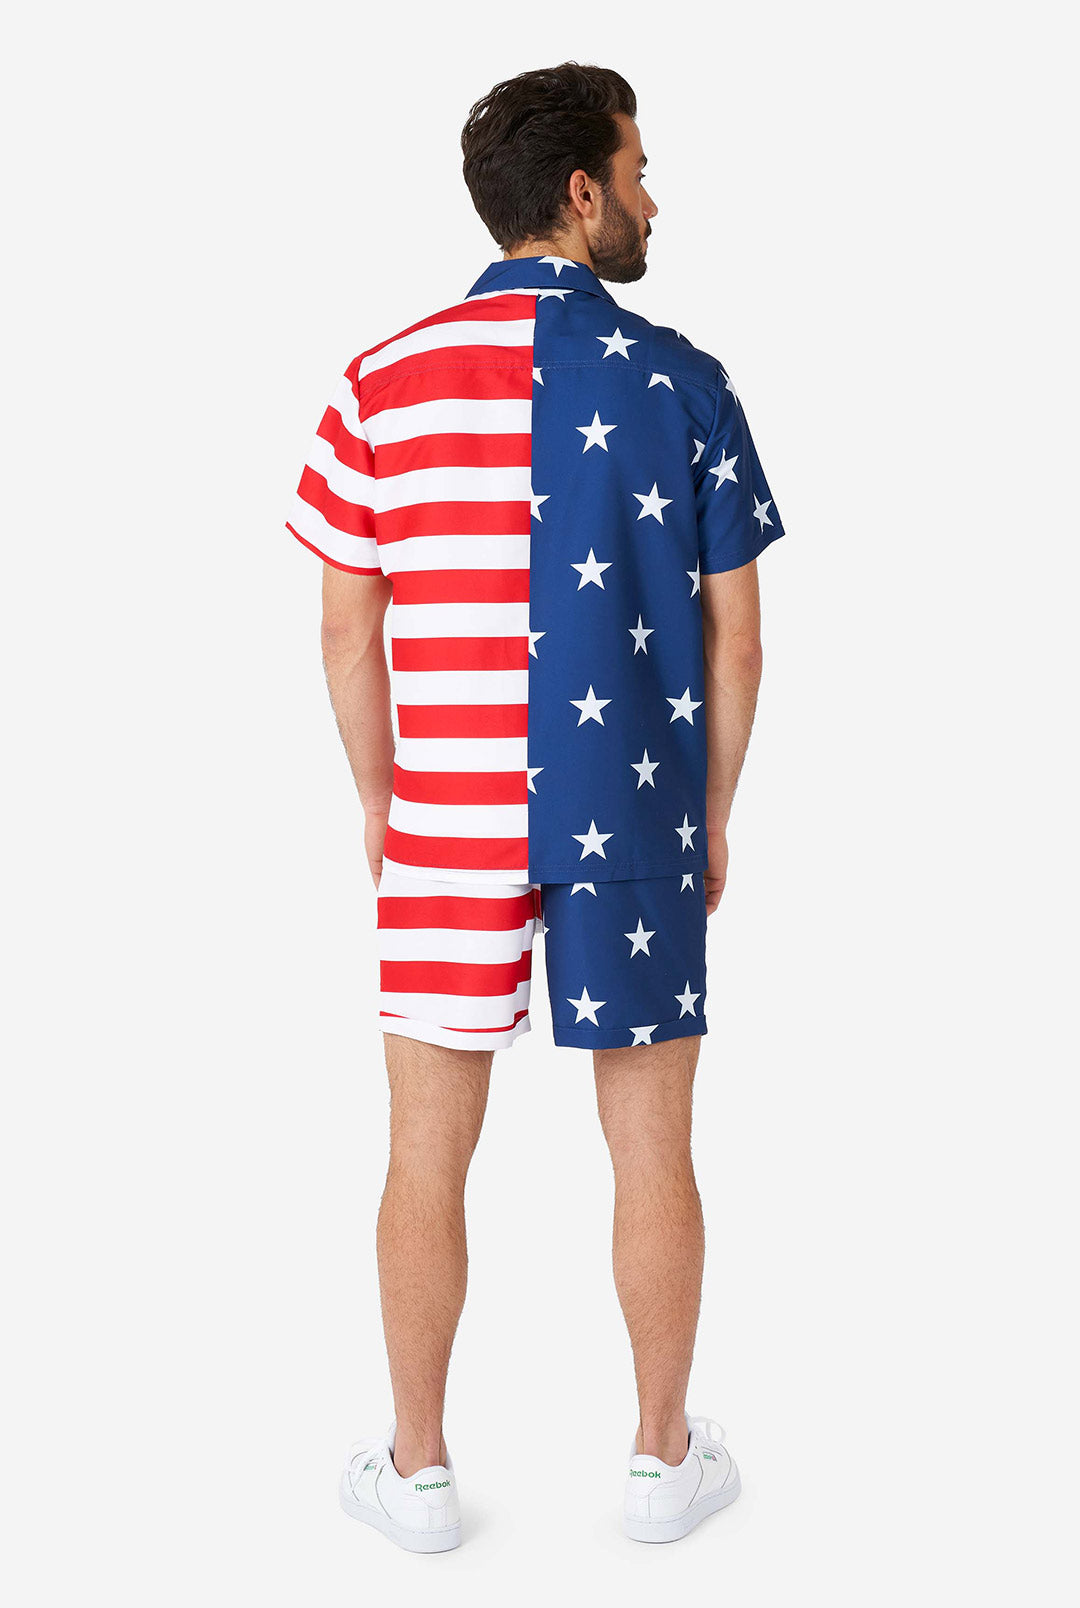 McSummer | Summer set with USA flag print | OppoSuits